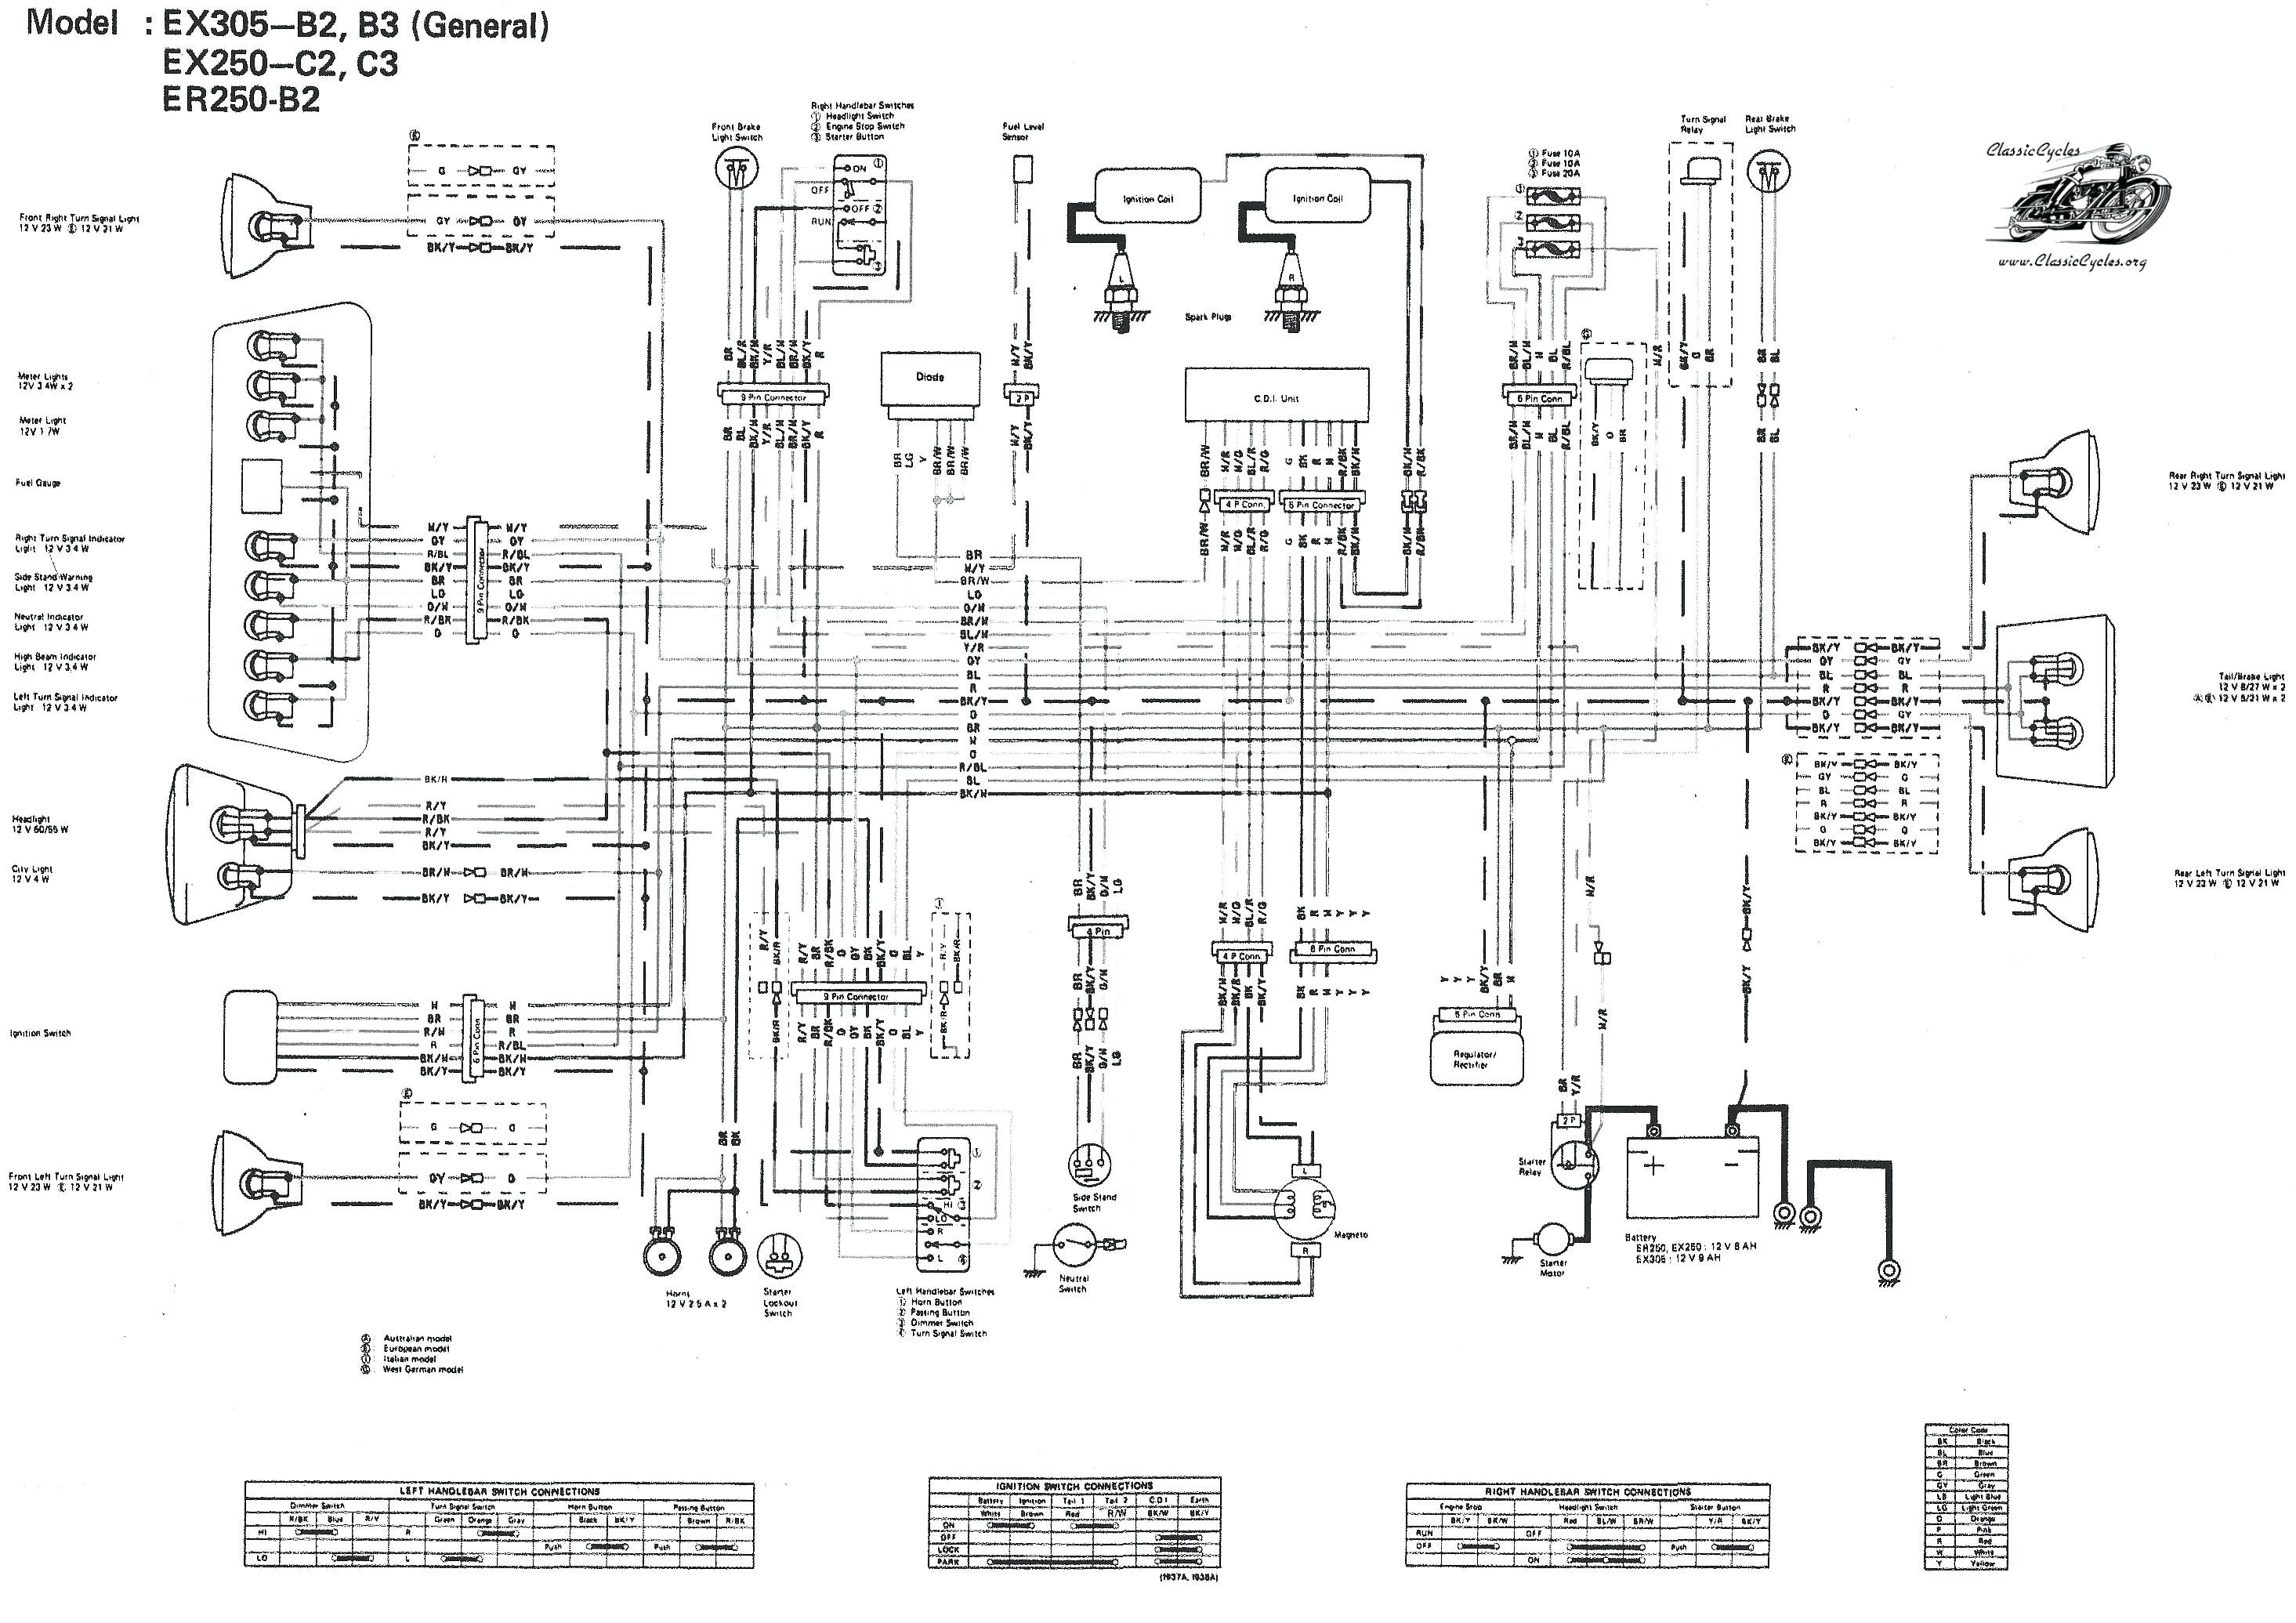 Ford Explorer Engine Diagram Kawasaki Engine Parts Diagram Delighted Inspiration Of Ford Explorer Engine Diagram